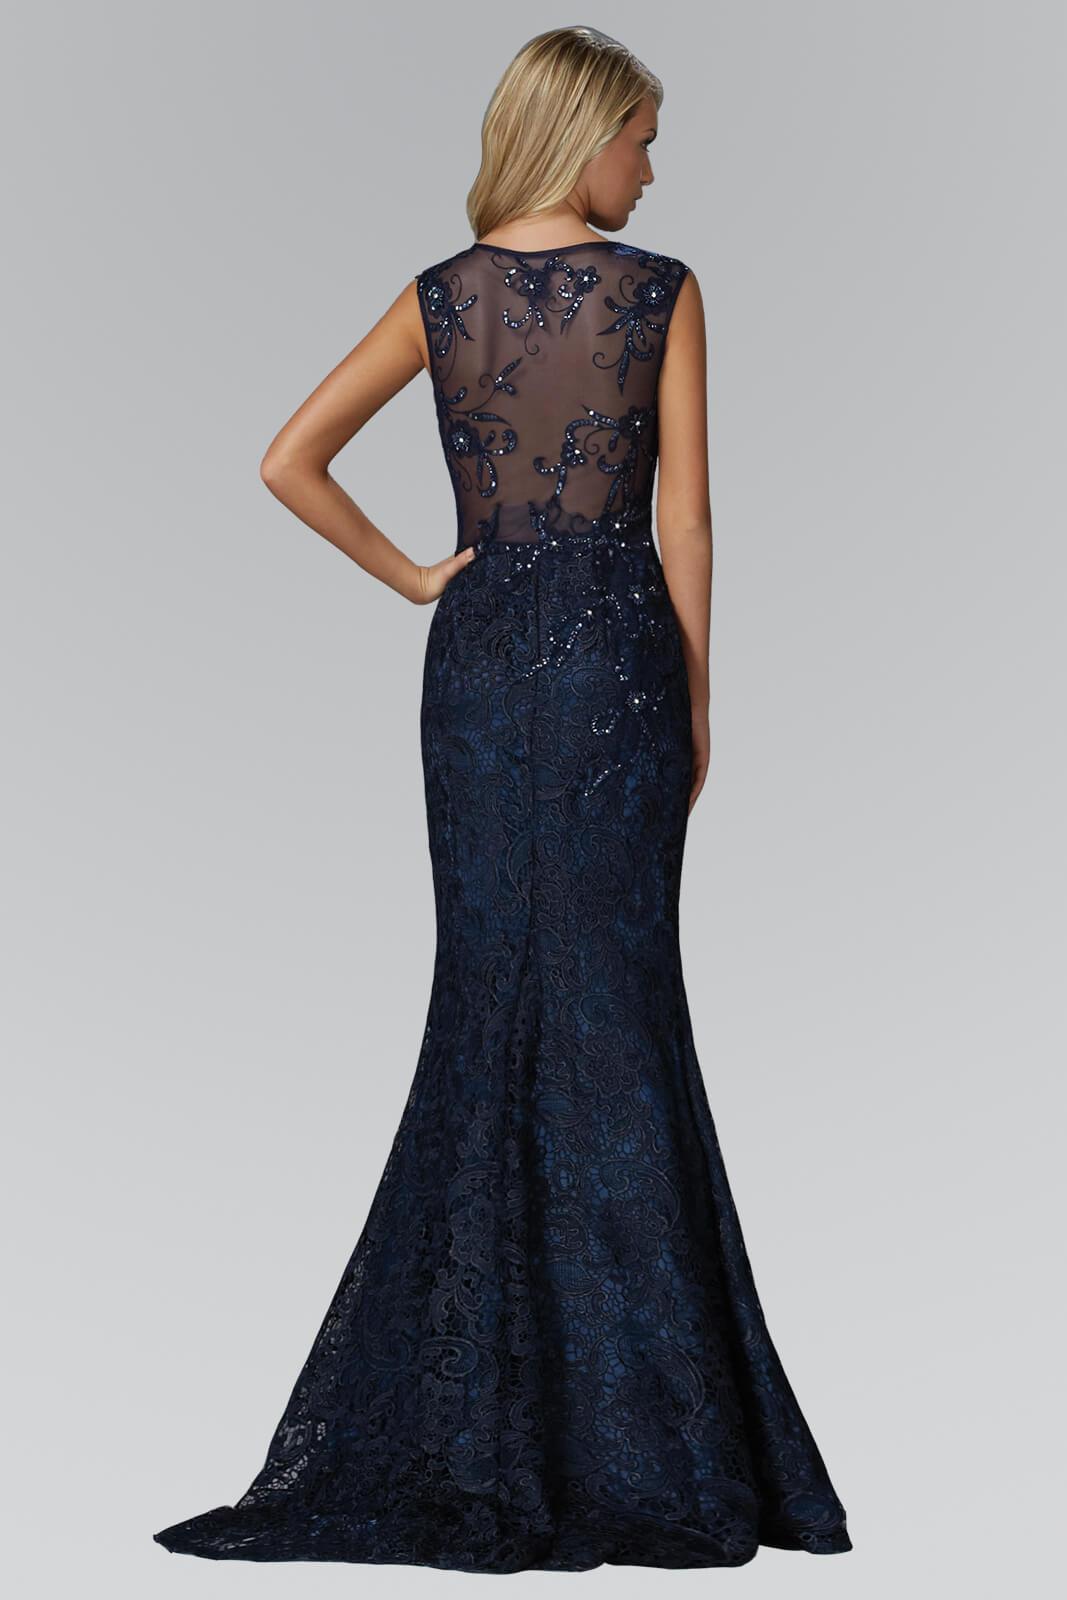 Lace Long Prom Dress Formal Evening Gown - The Dress Outlet Elizabeth K